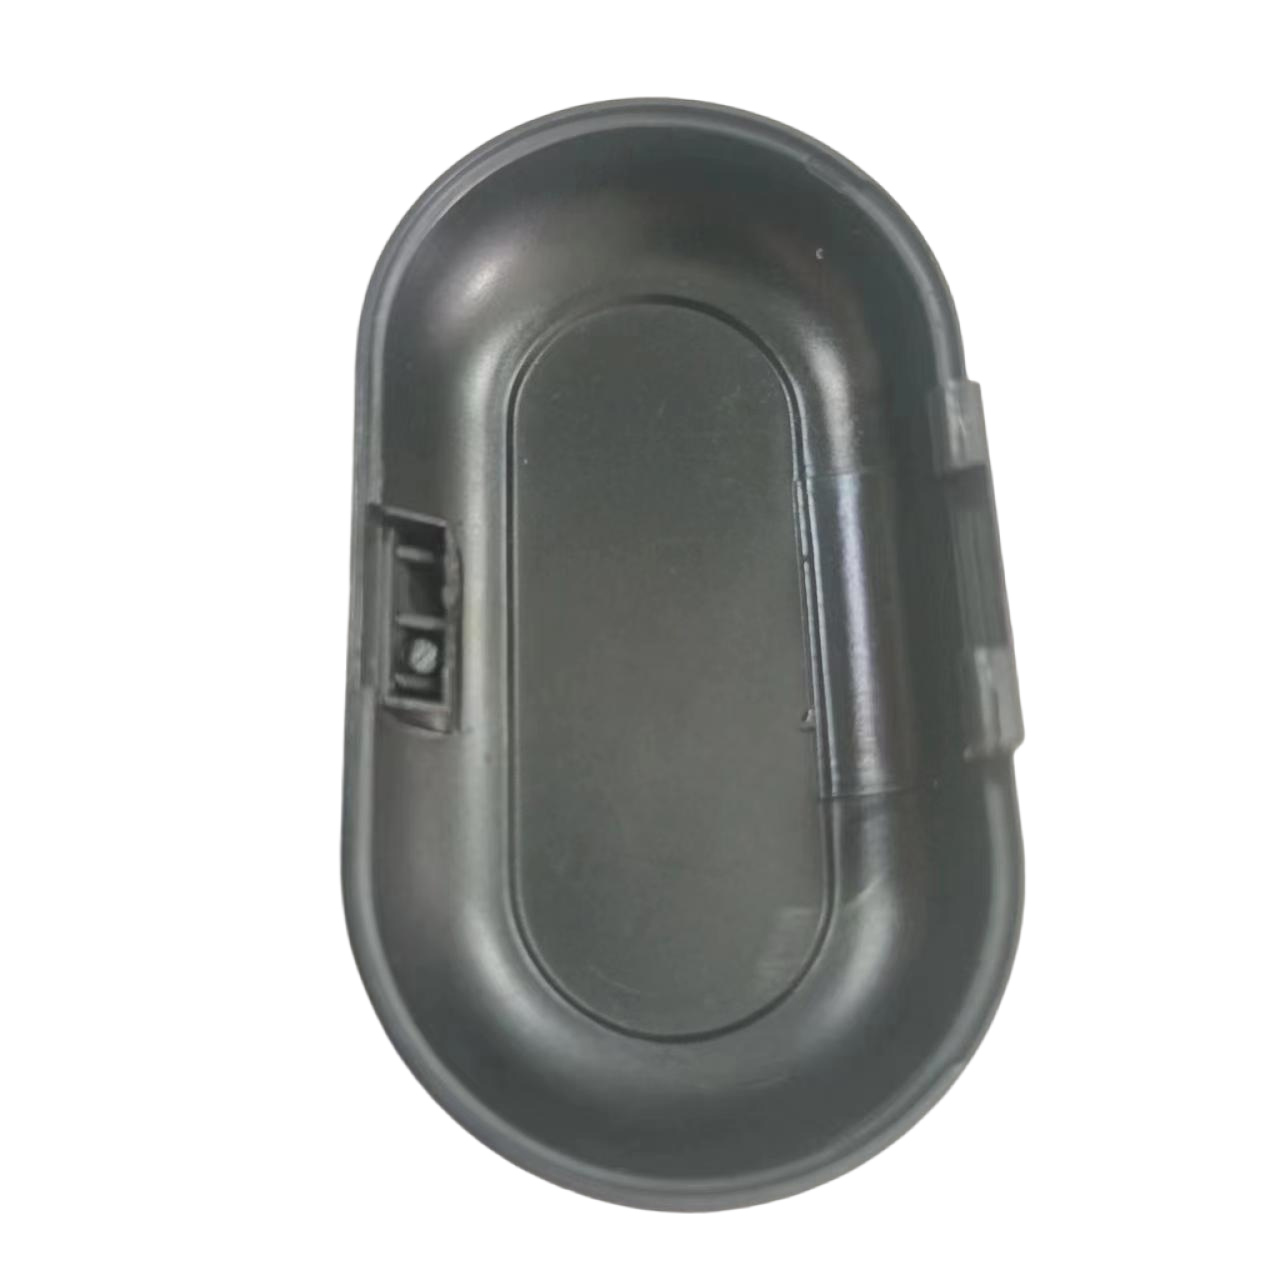 Headphone charging case upper cover